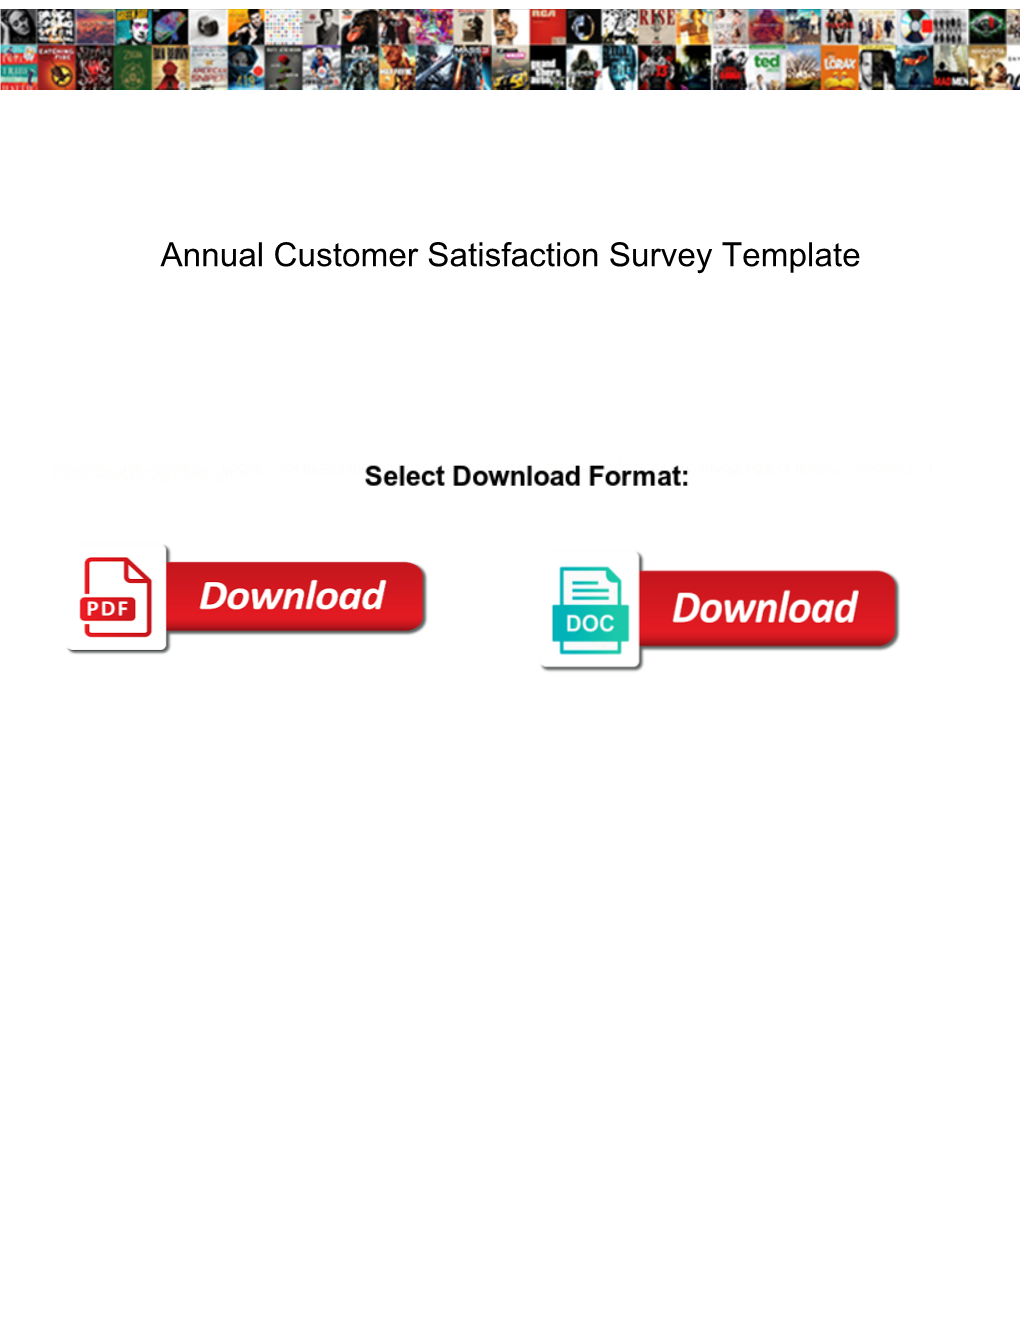 Annual Customer Satisfaction Survey Template